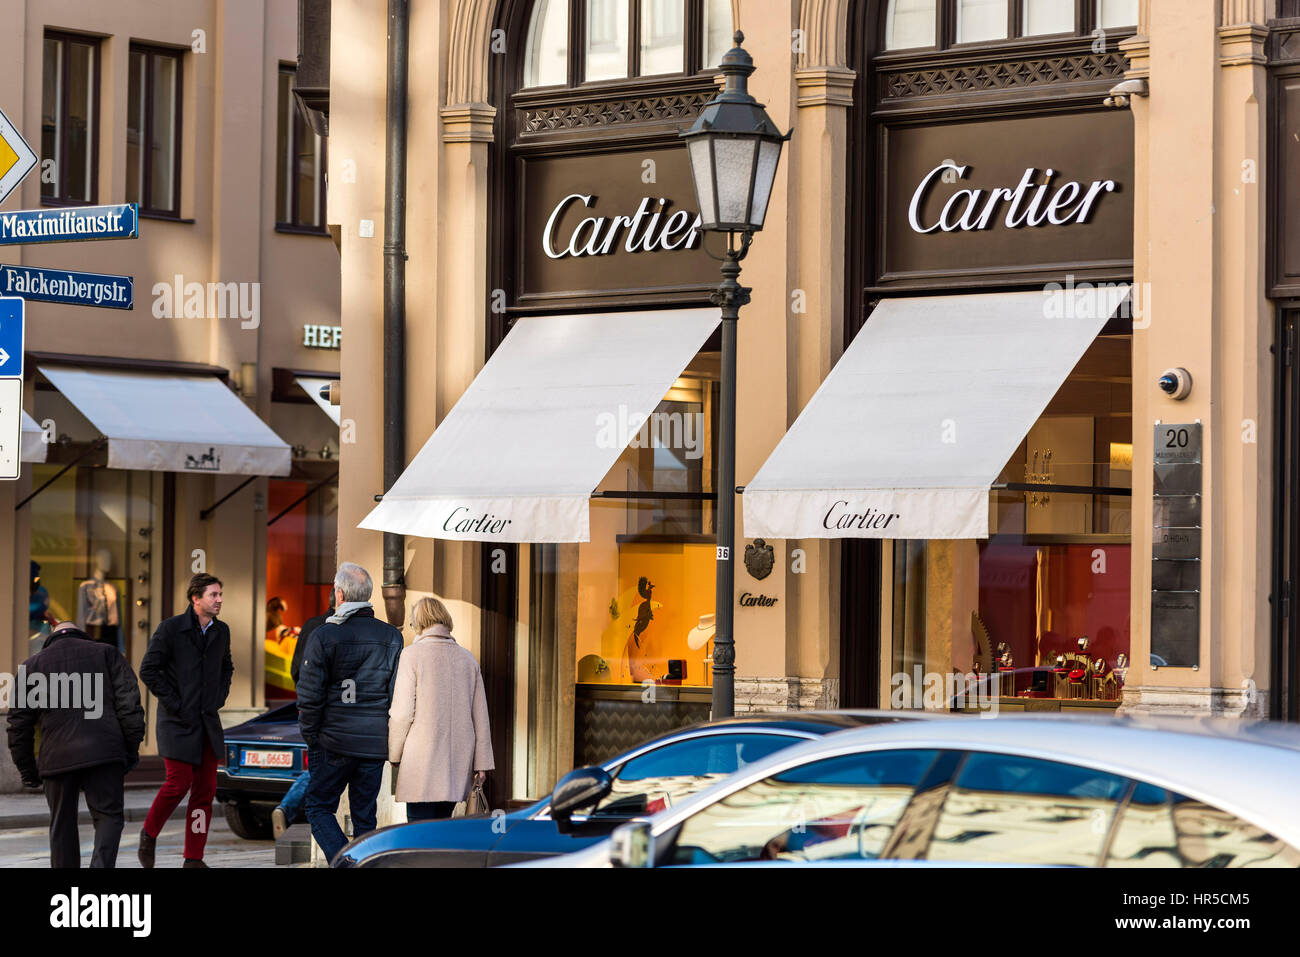 Cartier Shop Munich, Maximilianstraße 